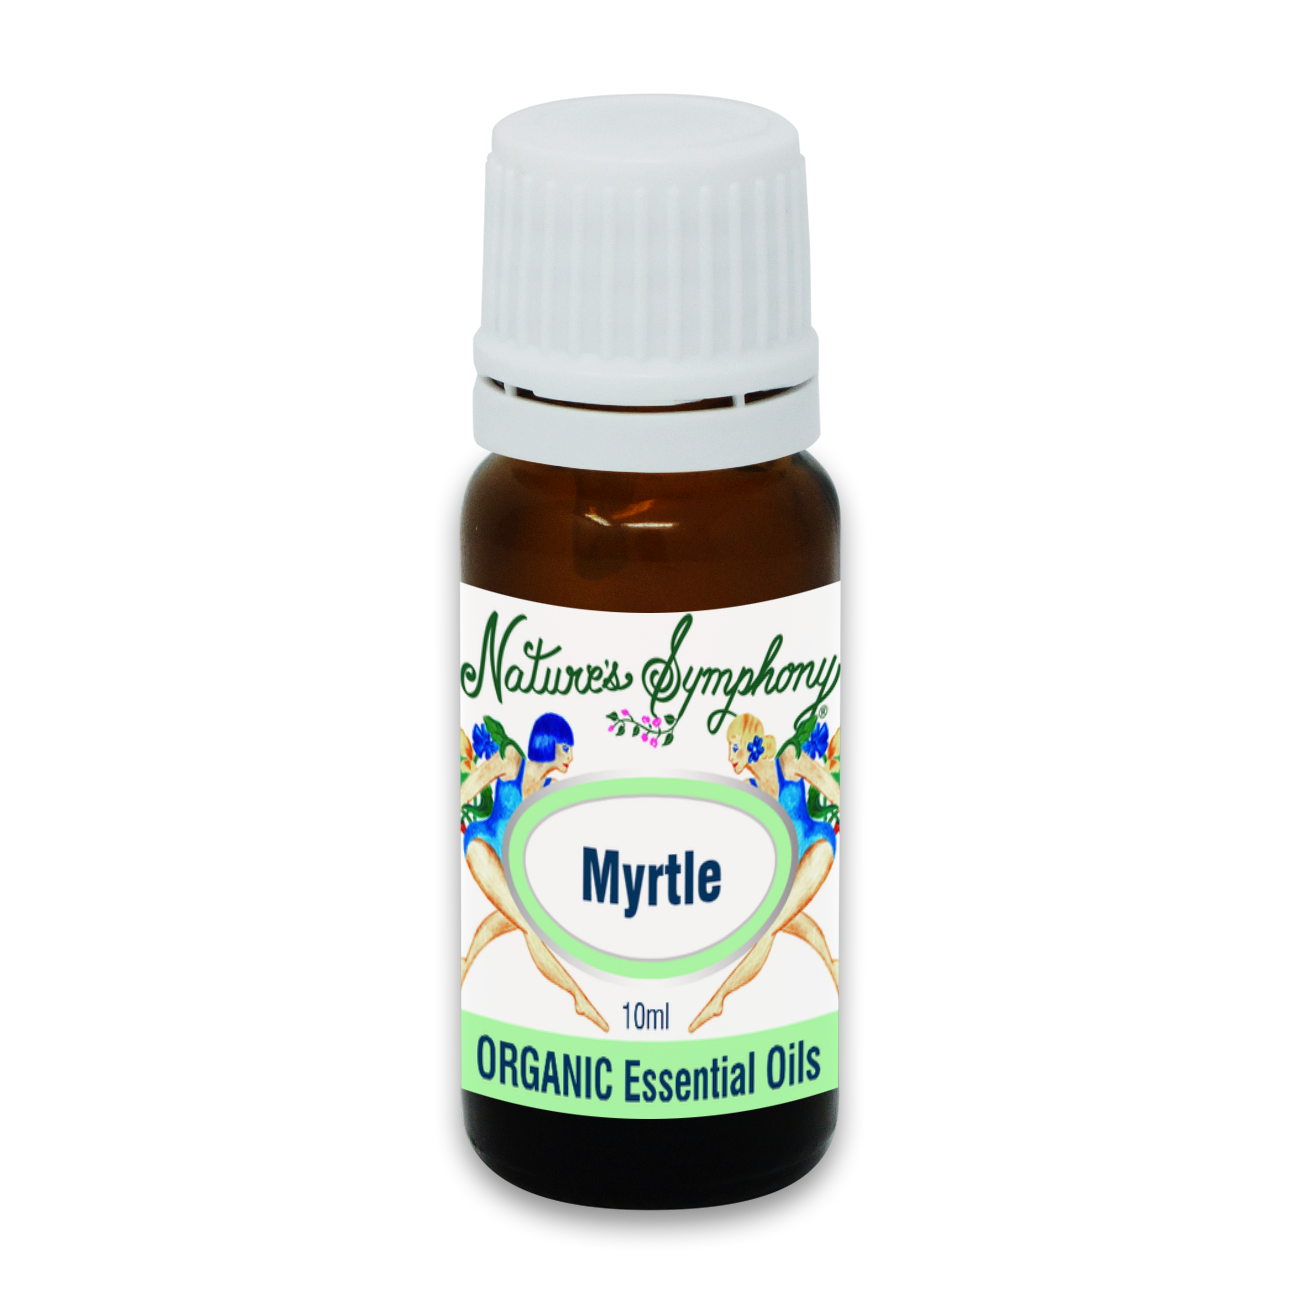 Myrtle, Organic/Wildcrafted oil - 10ml